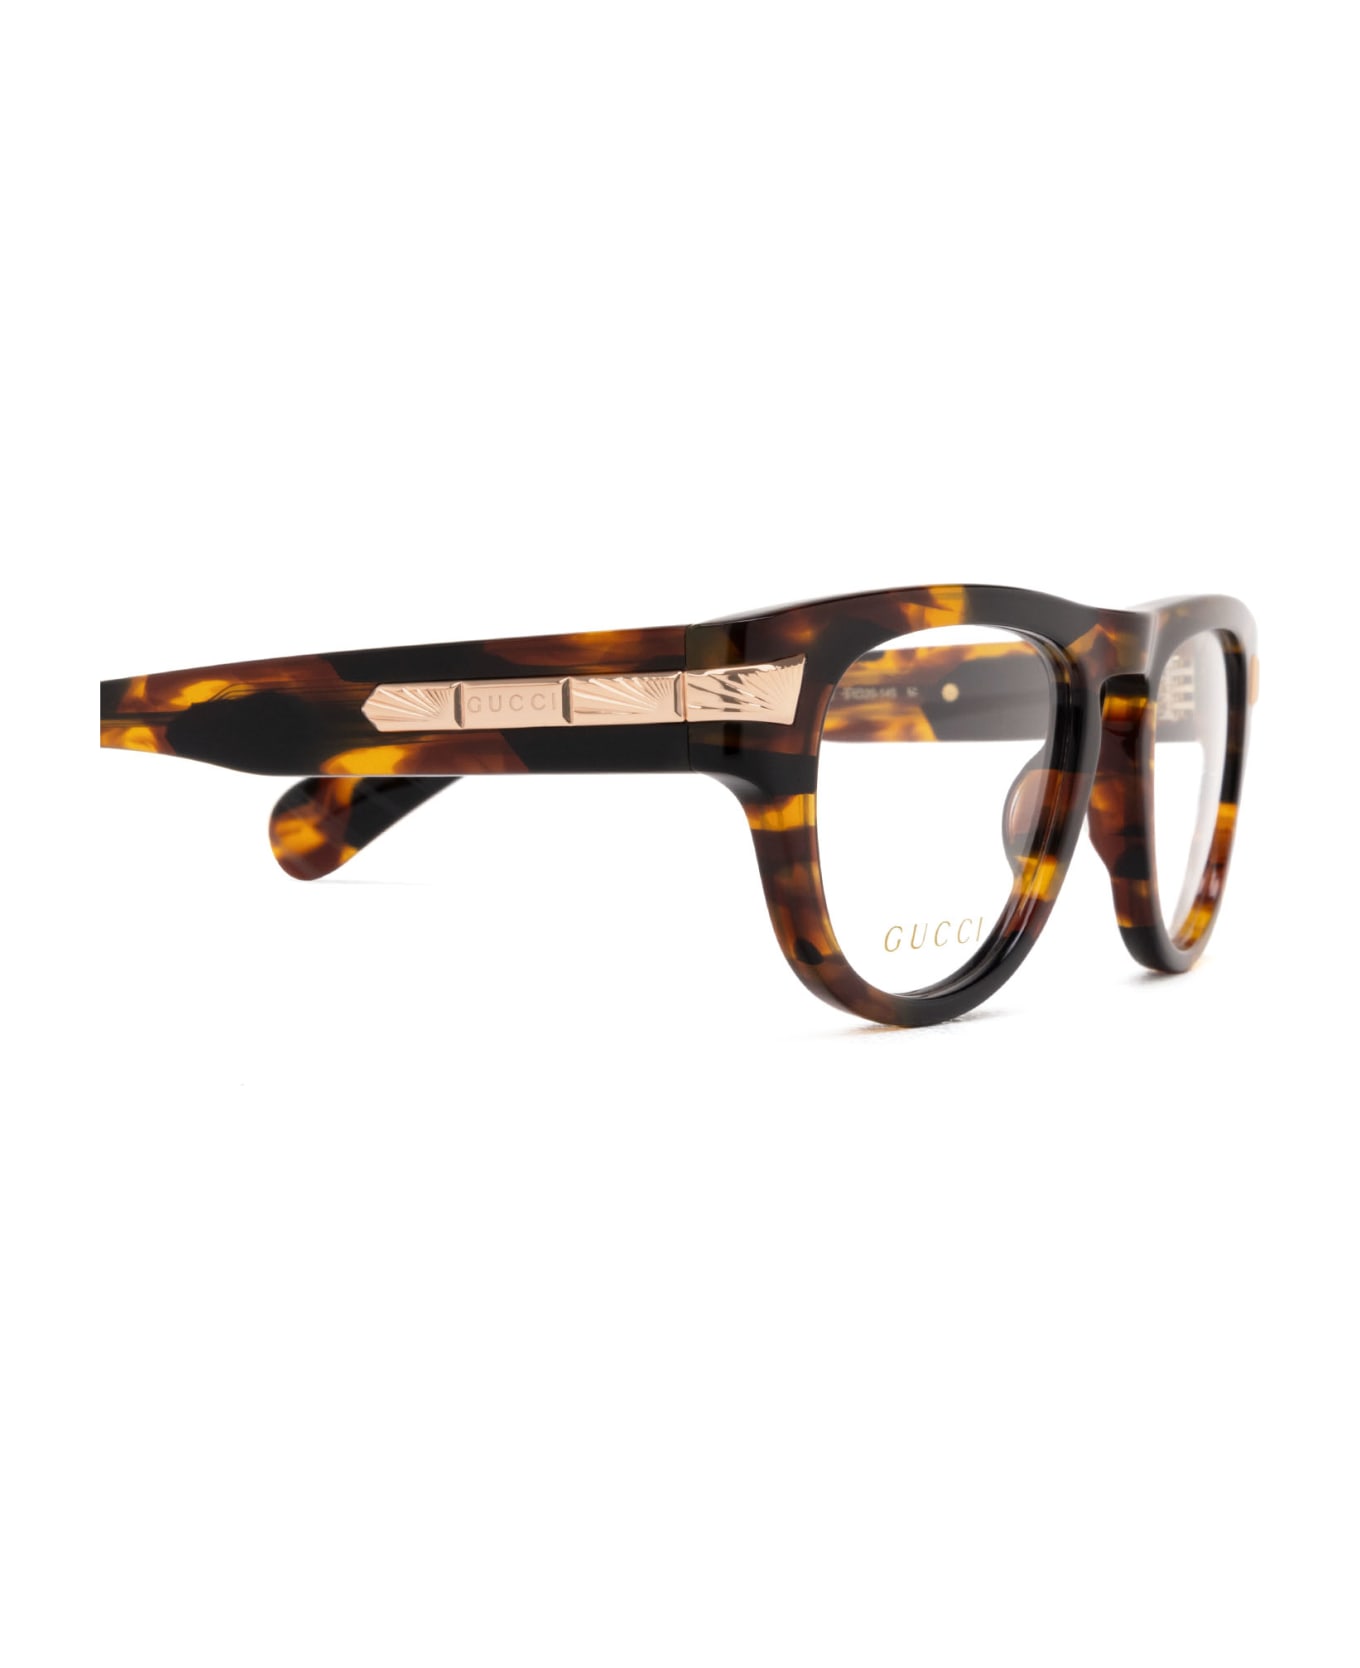 Gucci Eyewear Gg1519o Havana Glasses - Havana アイウェア